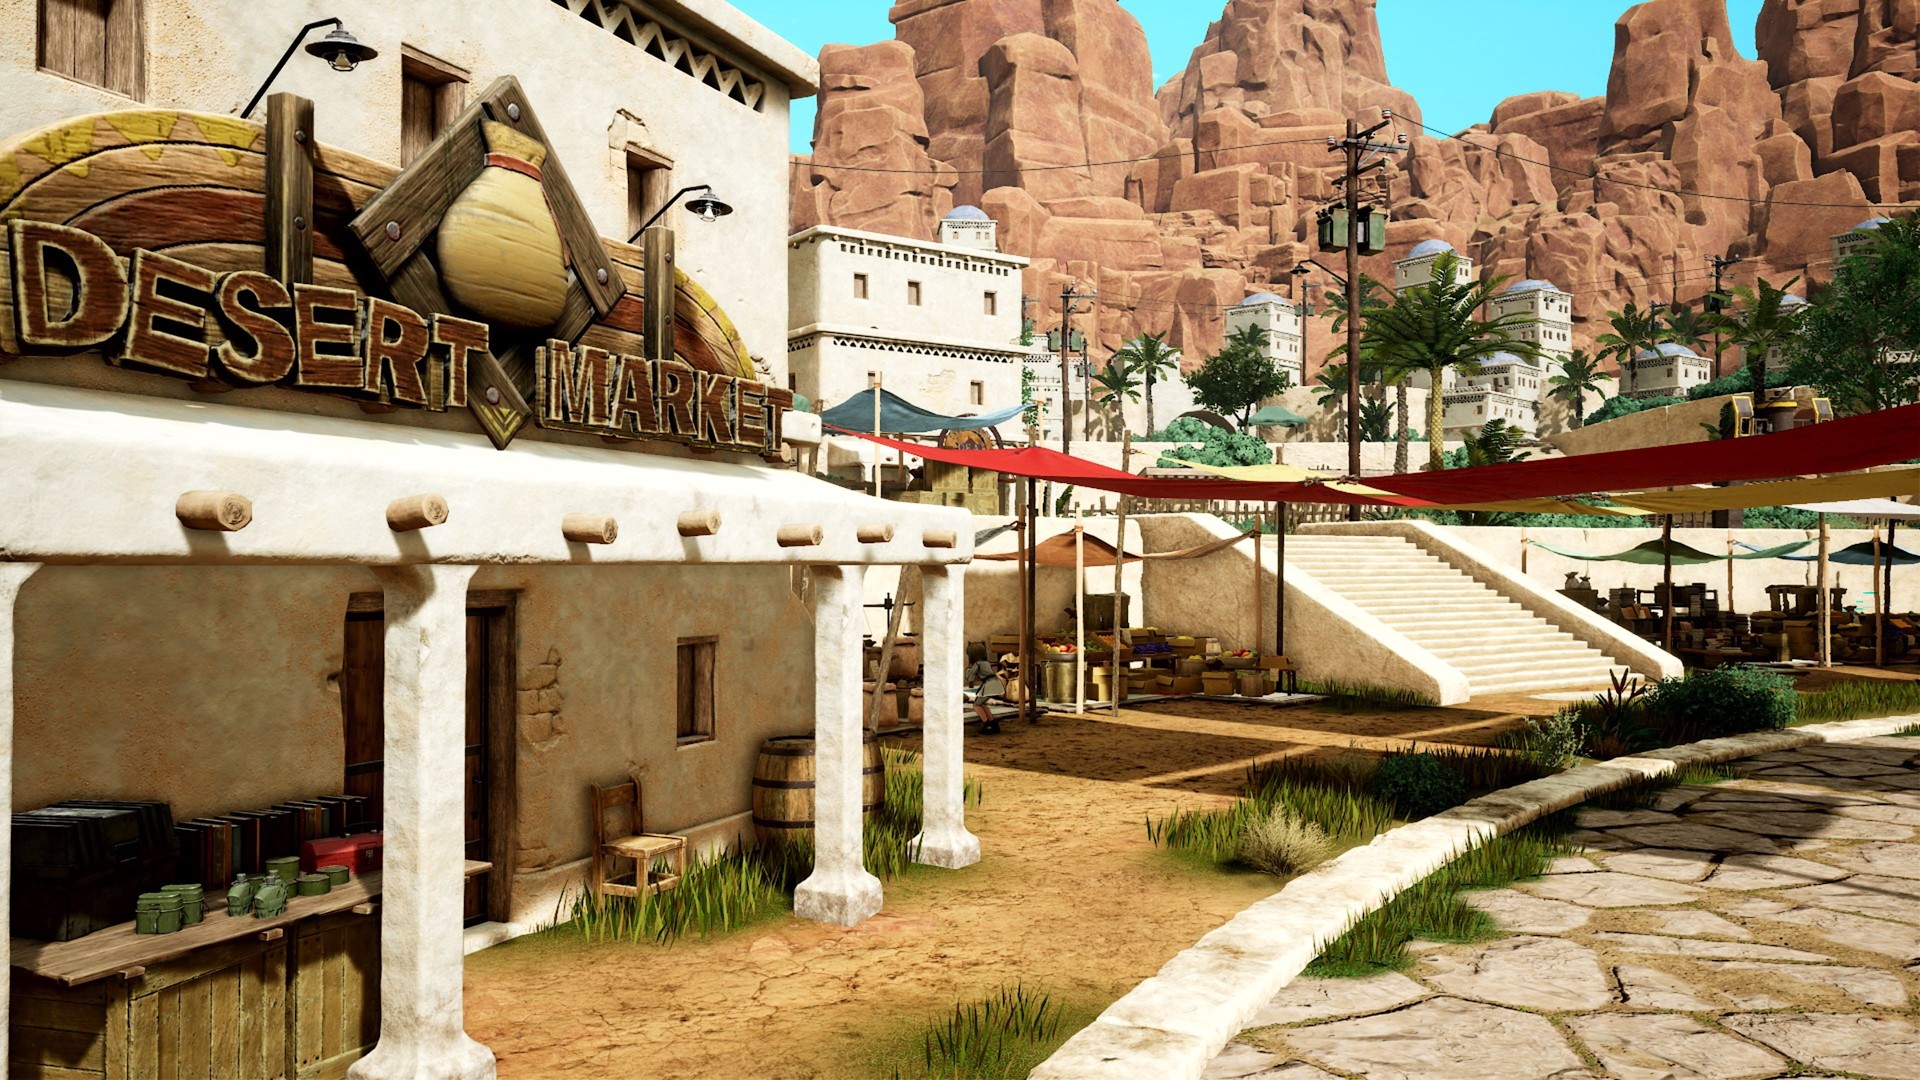 Sand Land Screenshot